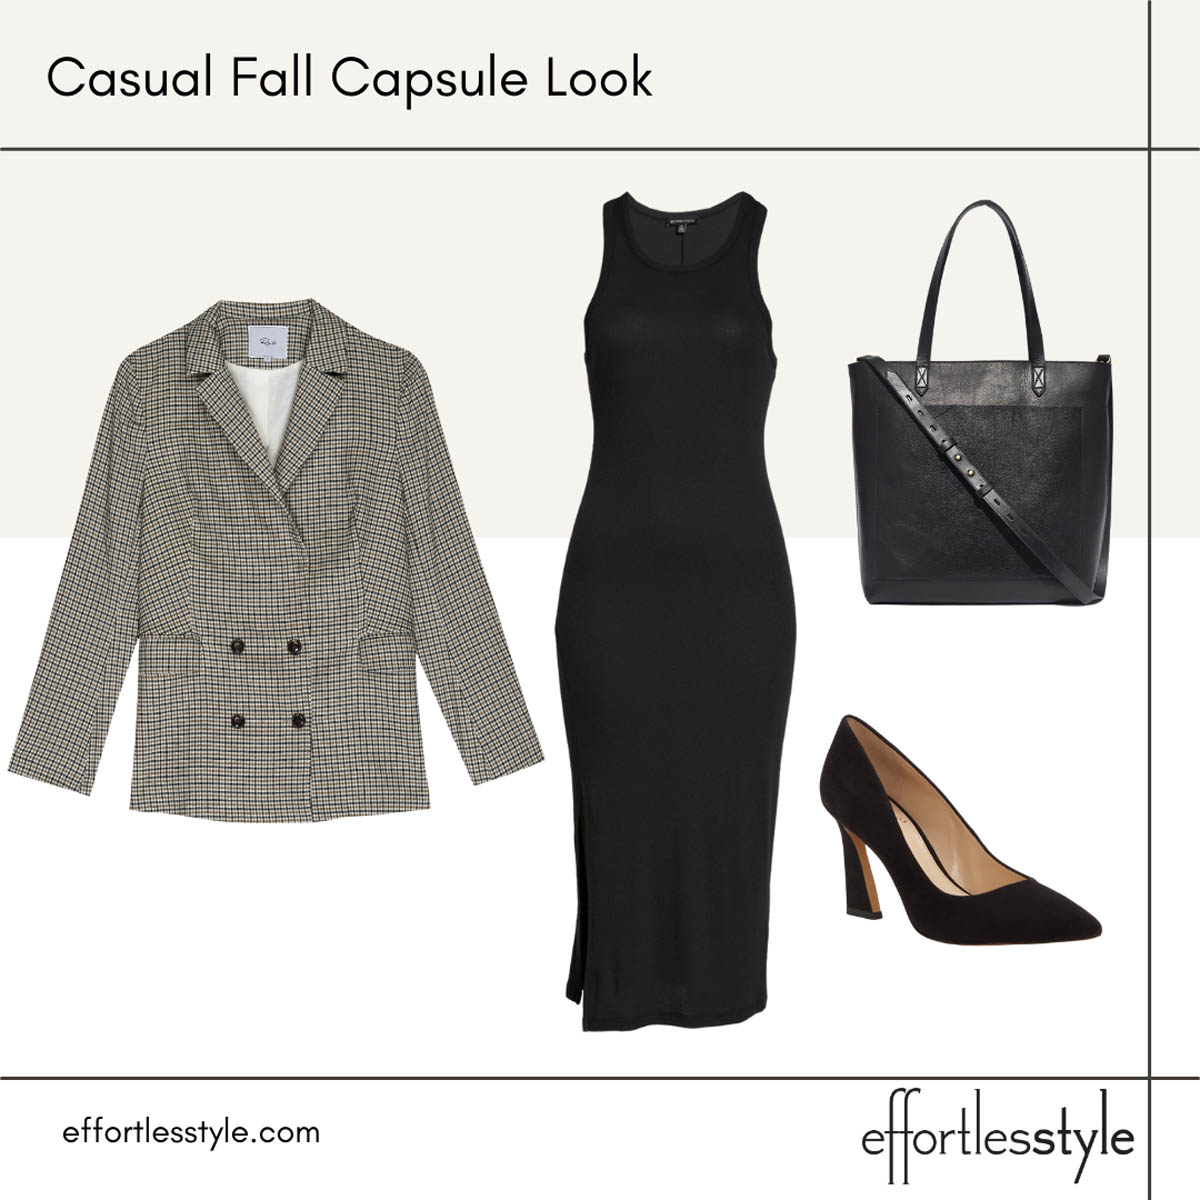 Fall Capsule Wardrobe Looks Boyfriend Blazer and Classic Black Dress